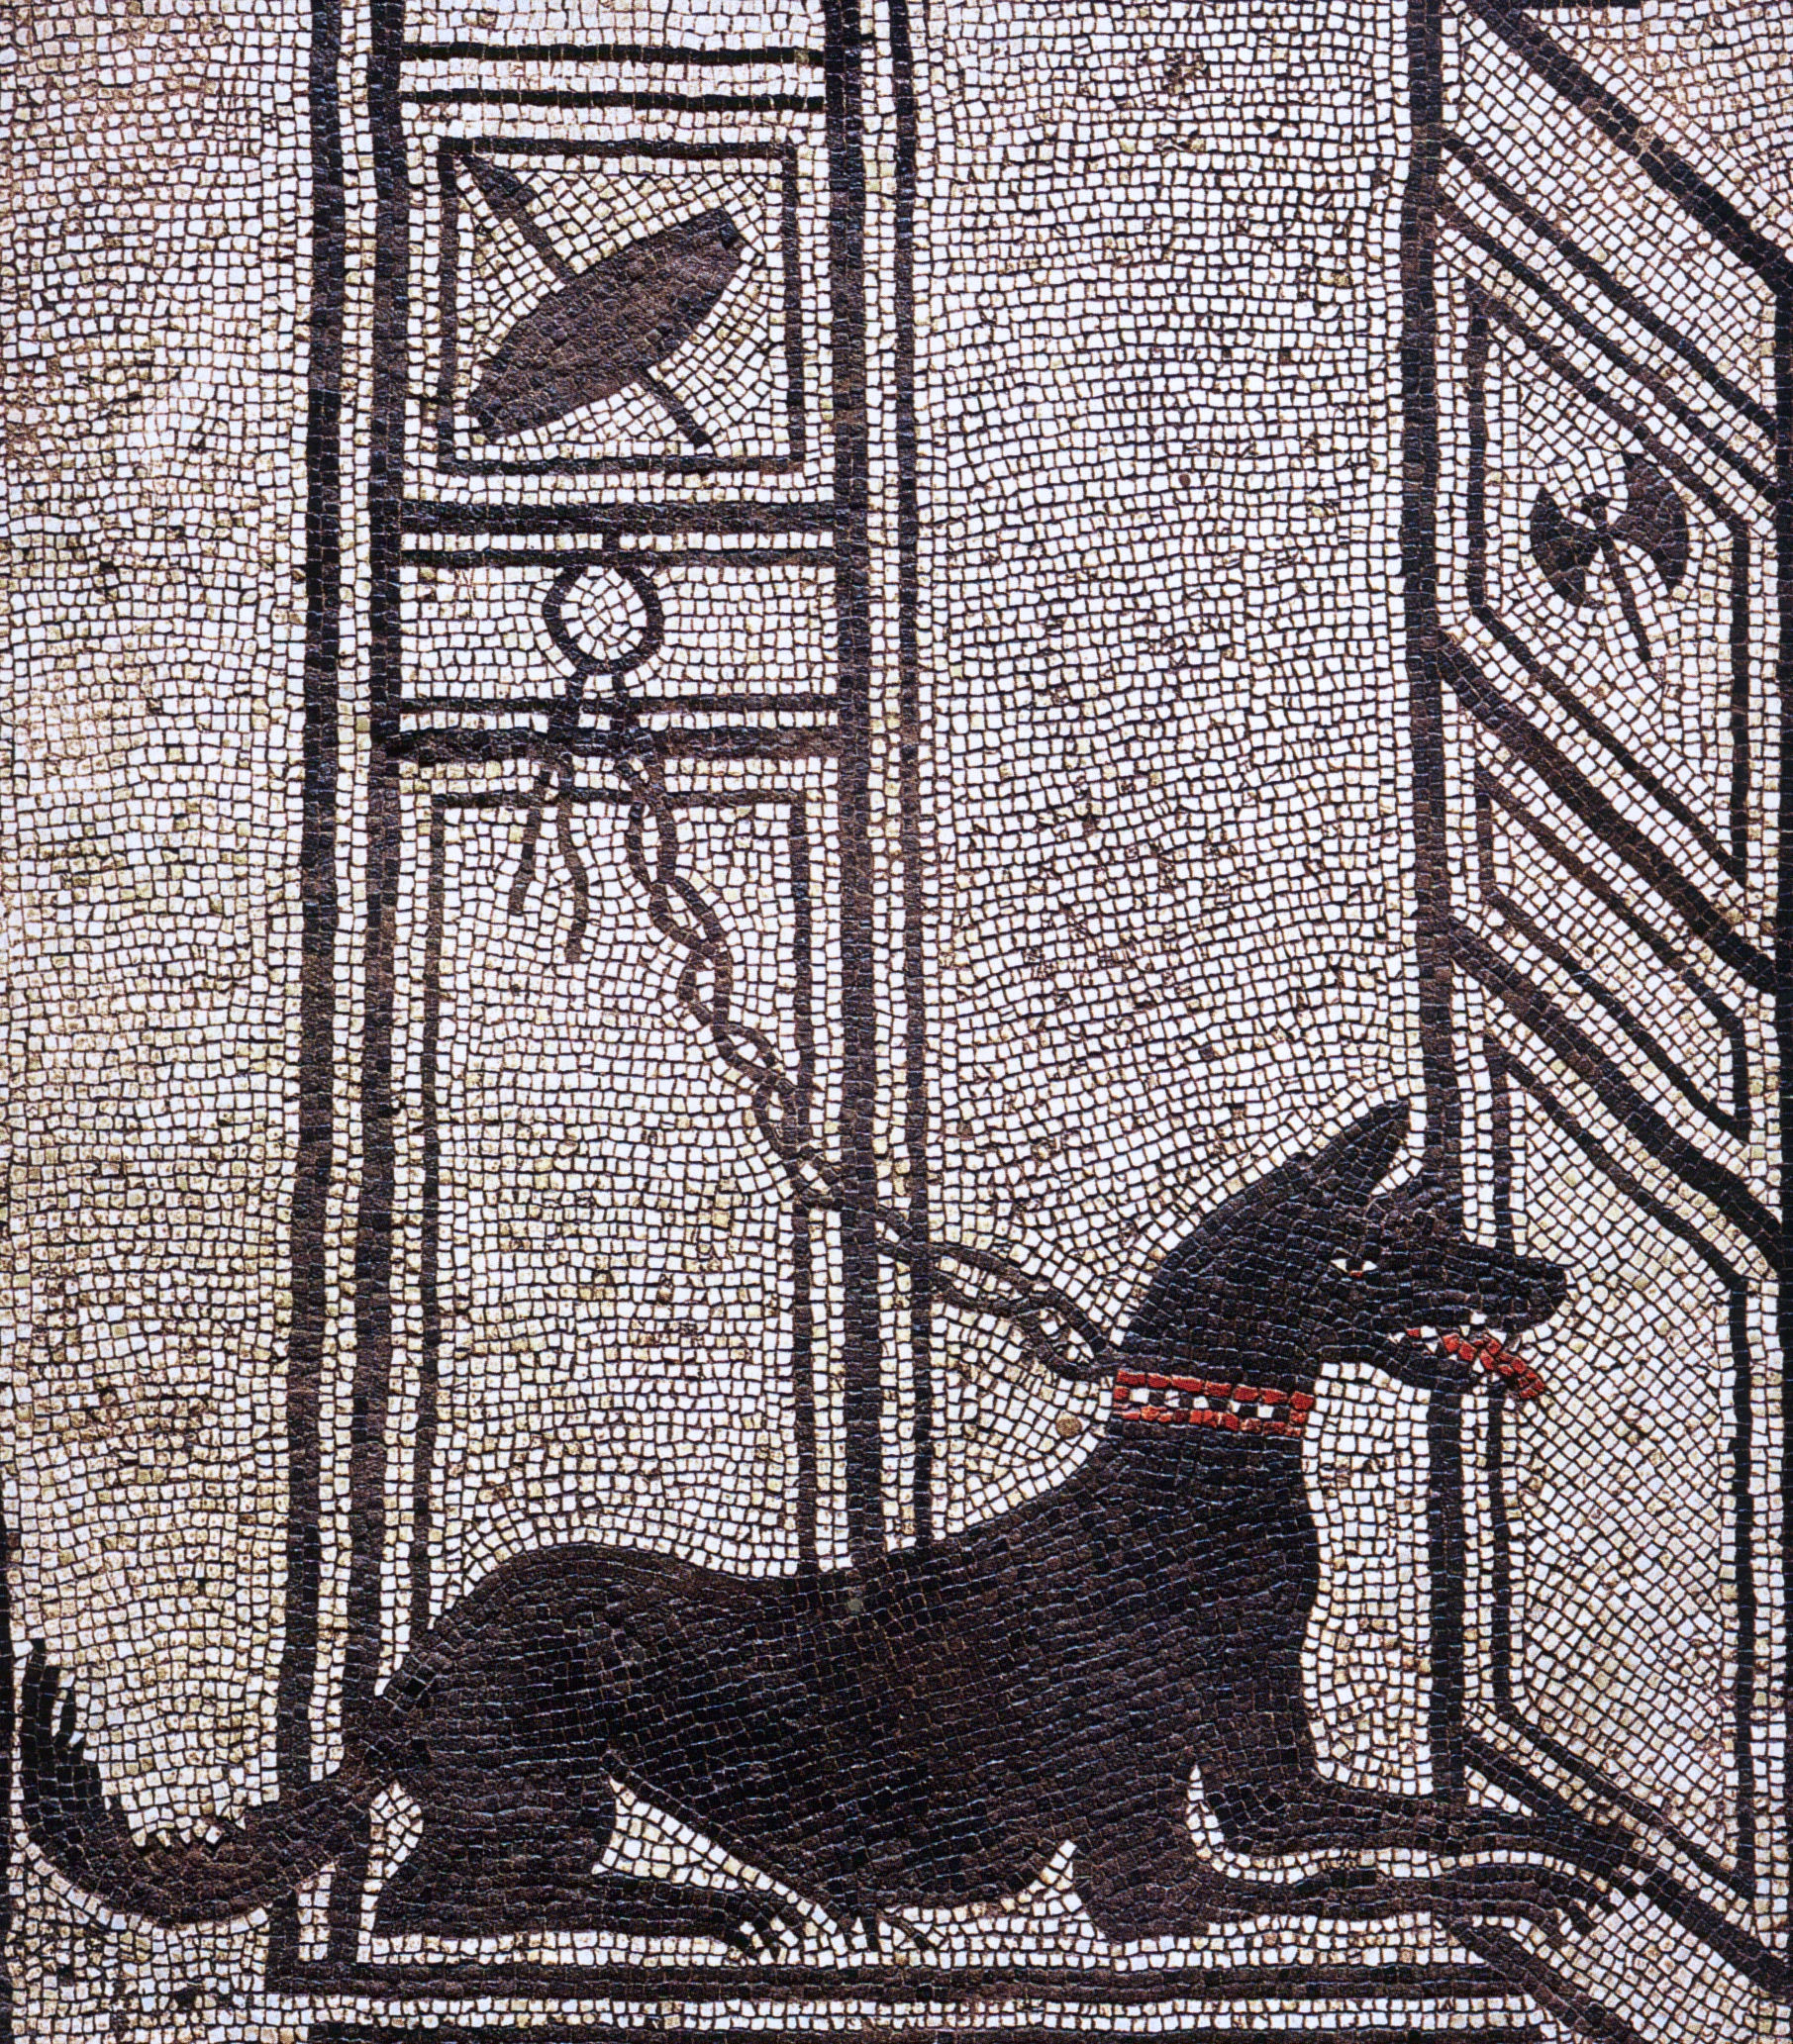 mosaic of black guard dog tethered to a wall